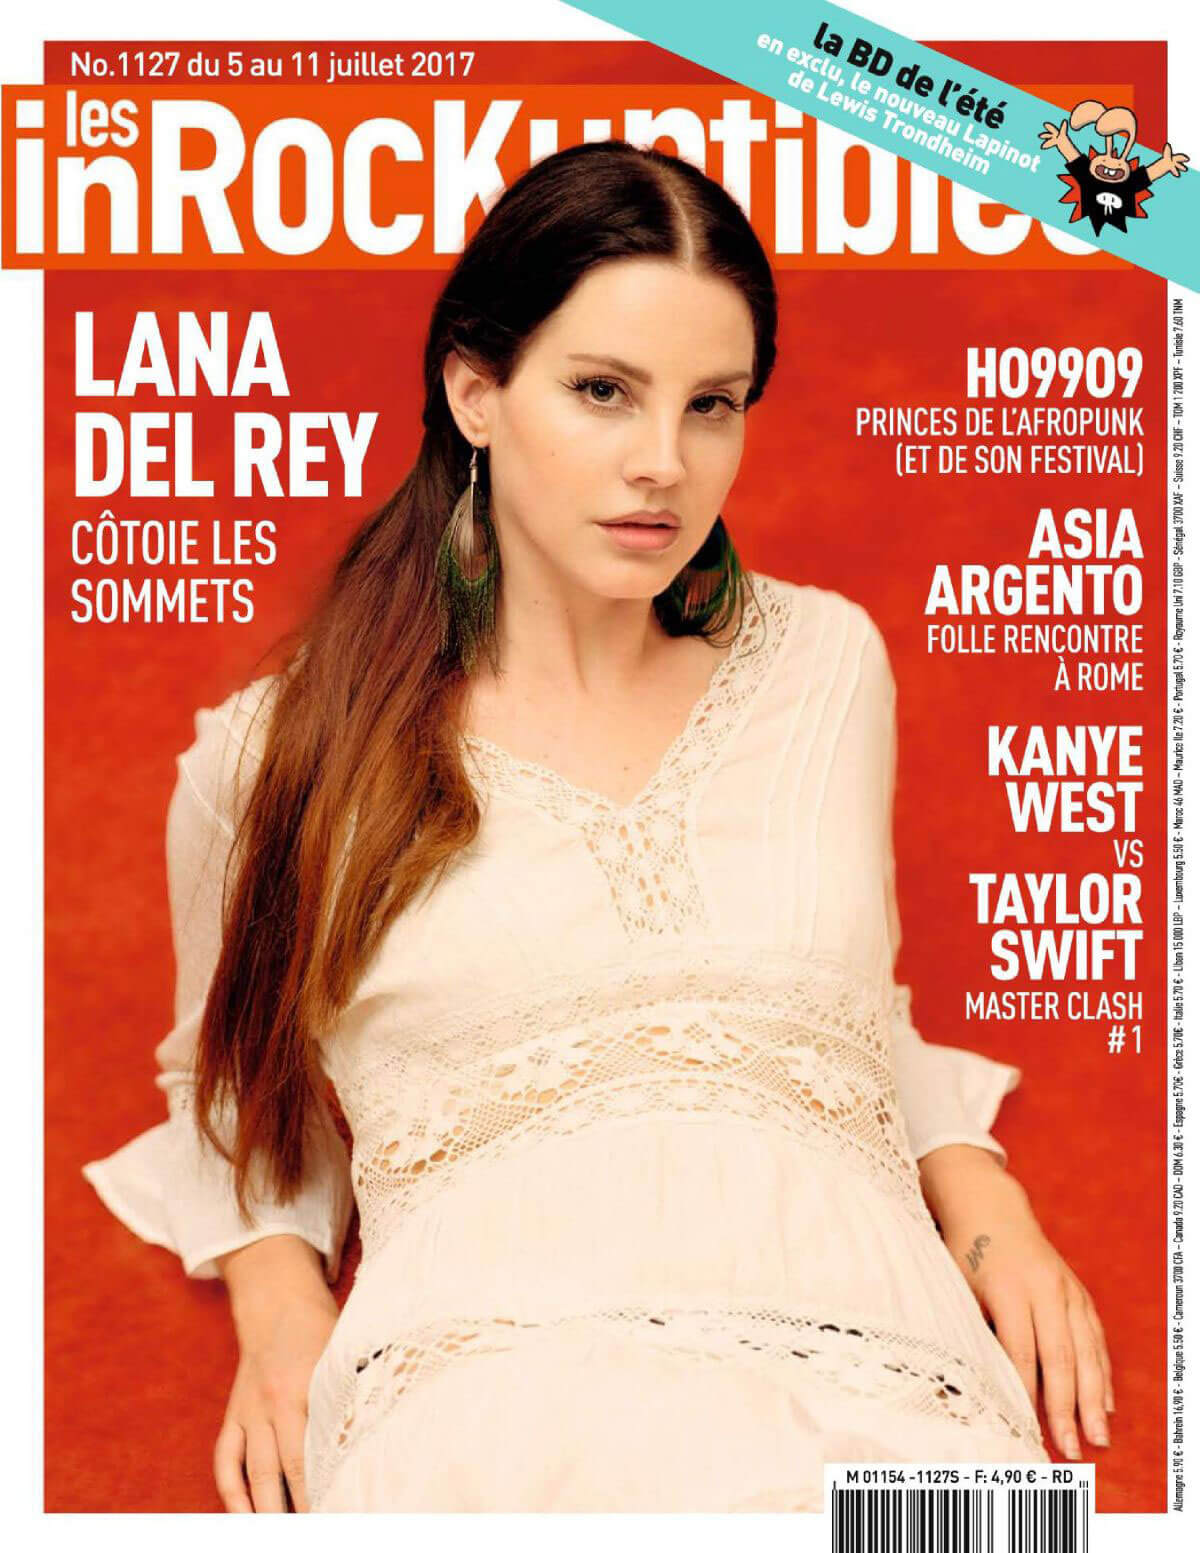 Lana Del Rey Photoshoot for Les Inrockuptibles Magazine